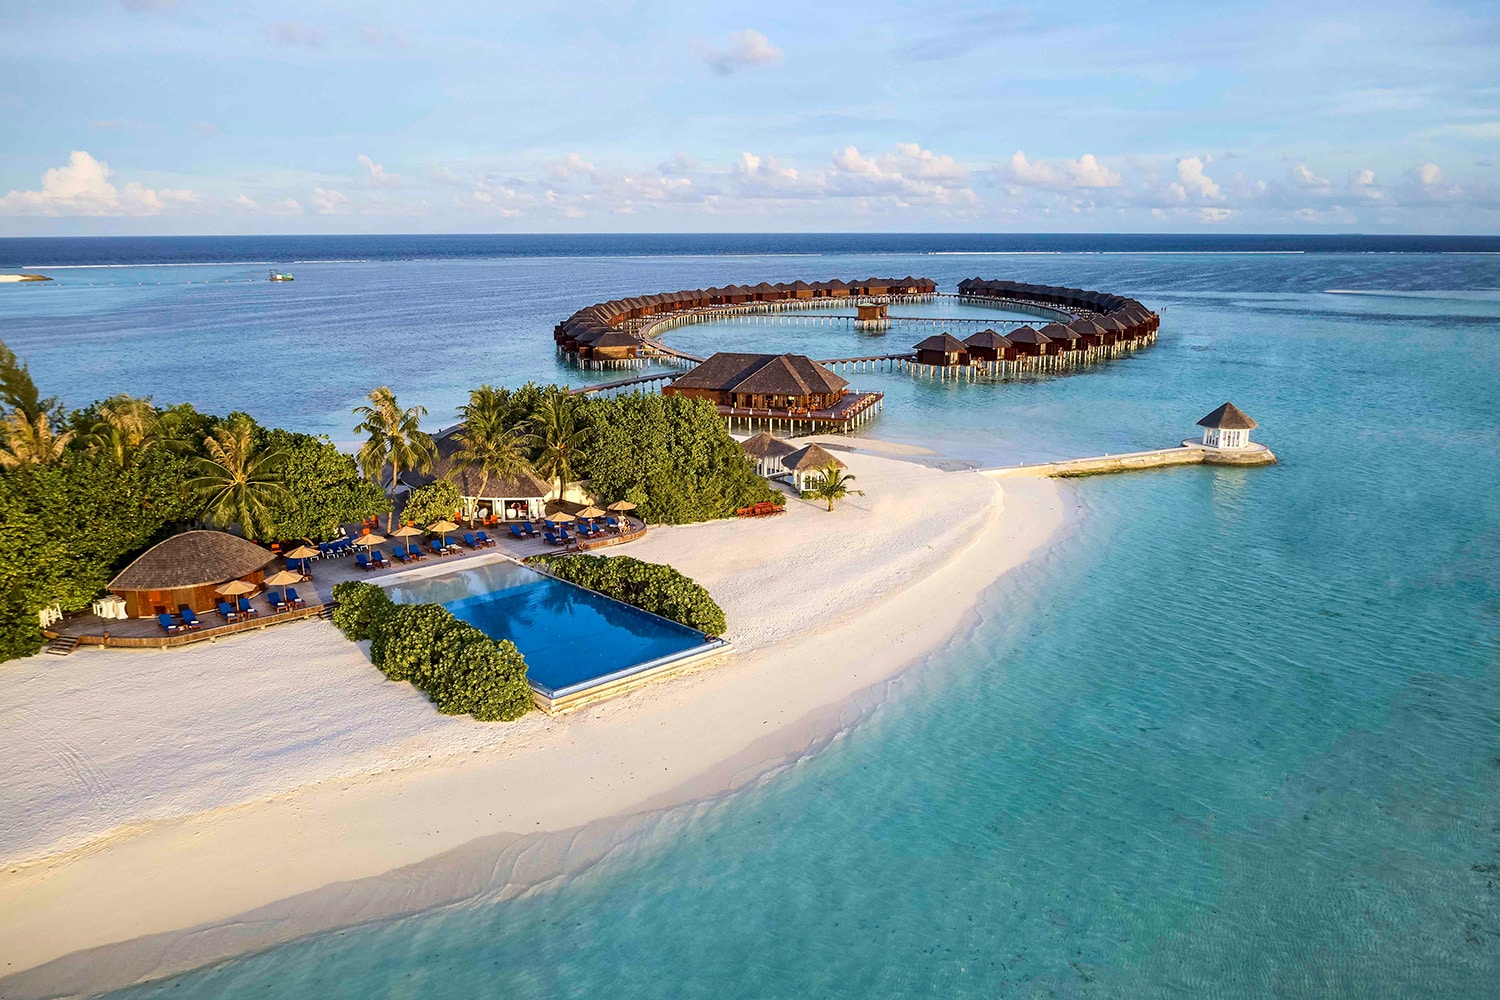 Resort per famiglie alle Maldive, Sun Siyam Olhuveli